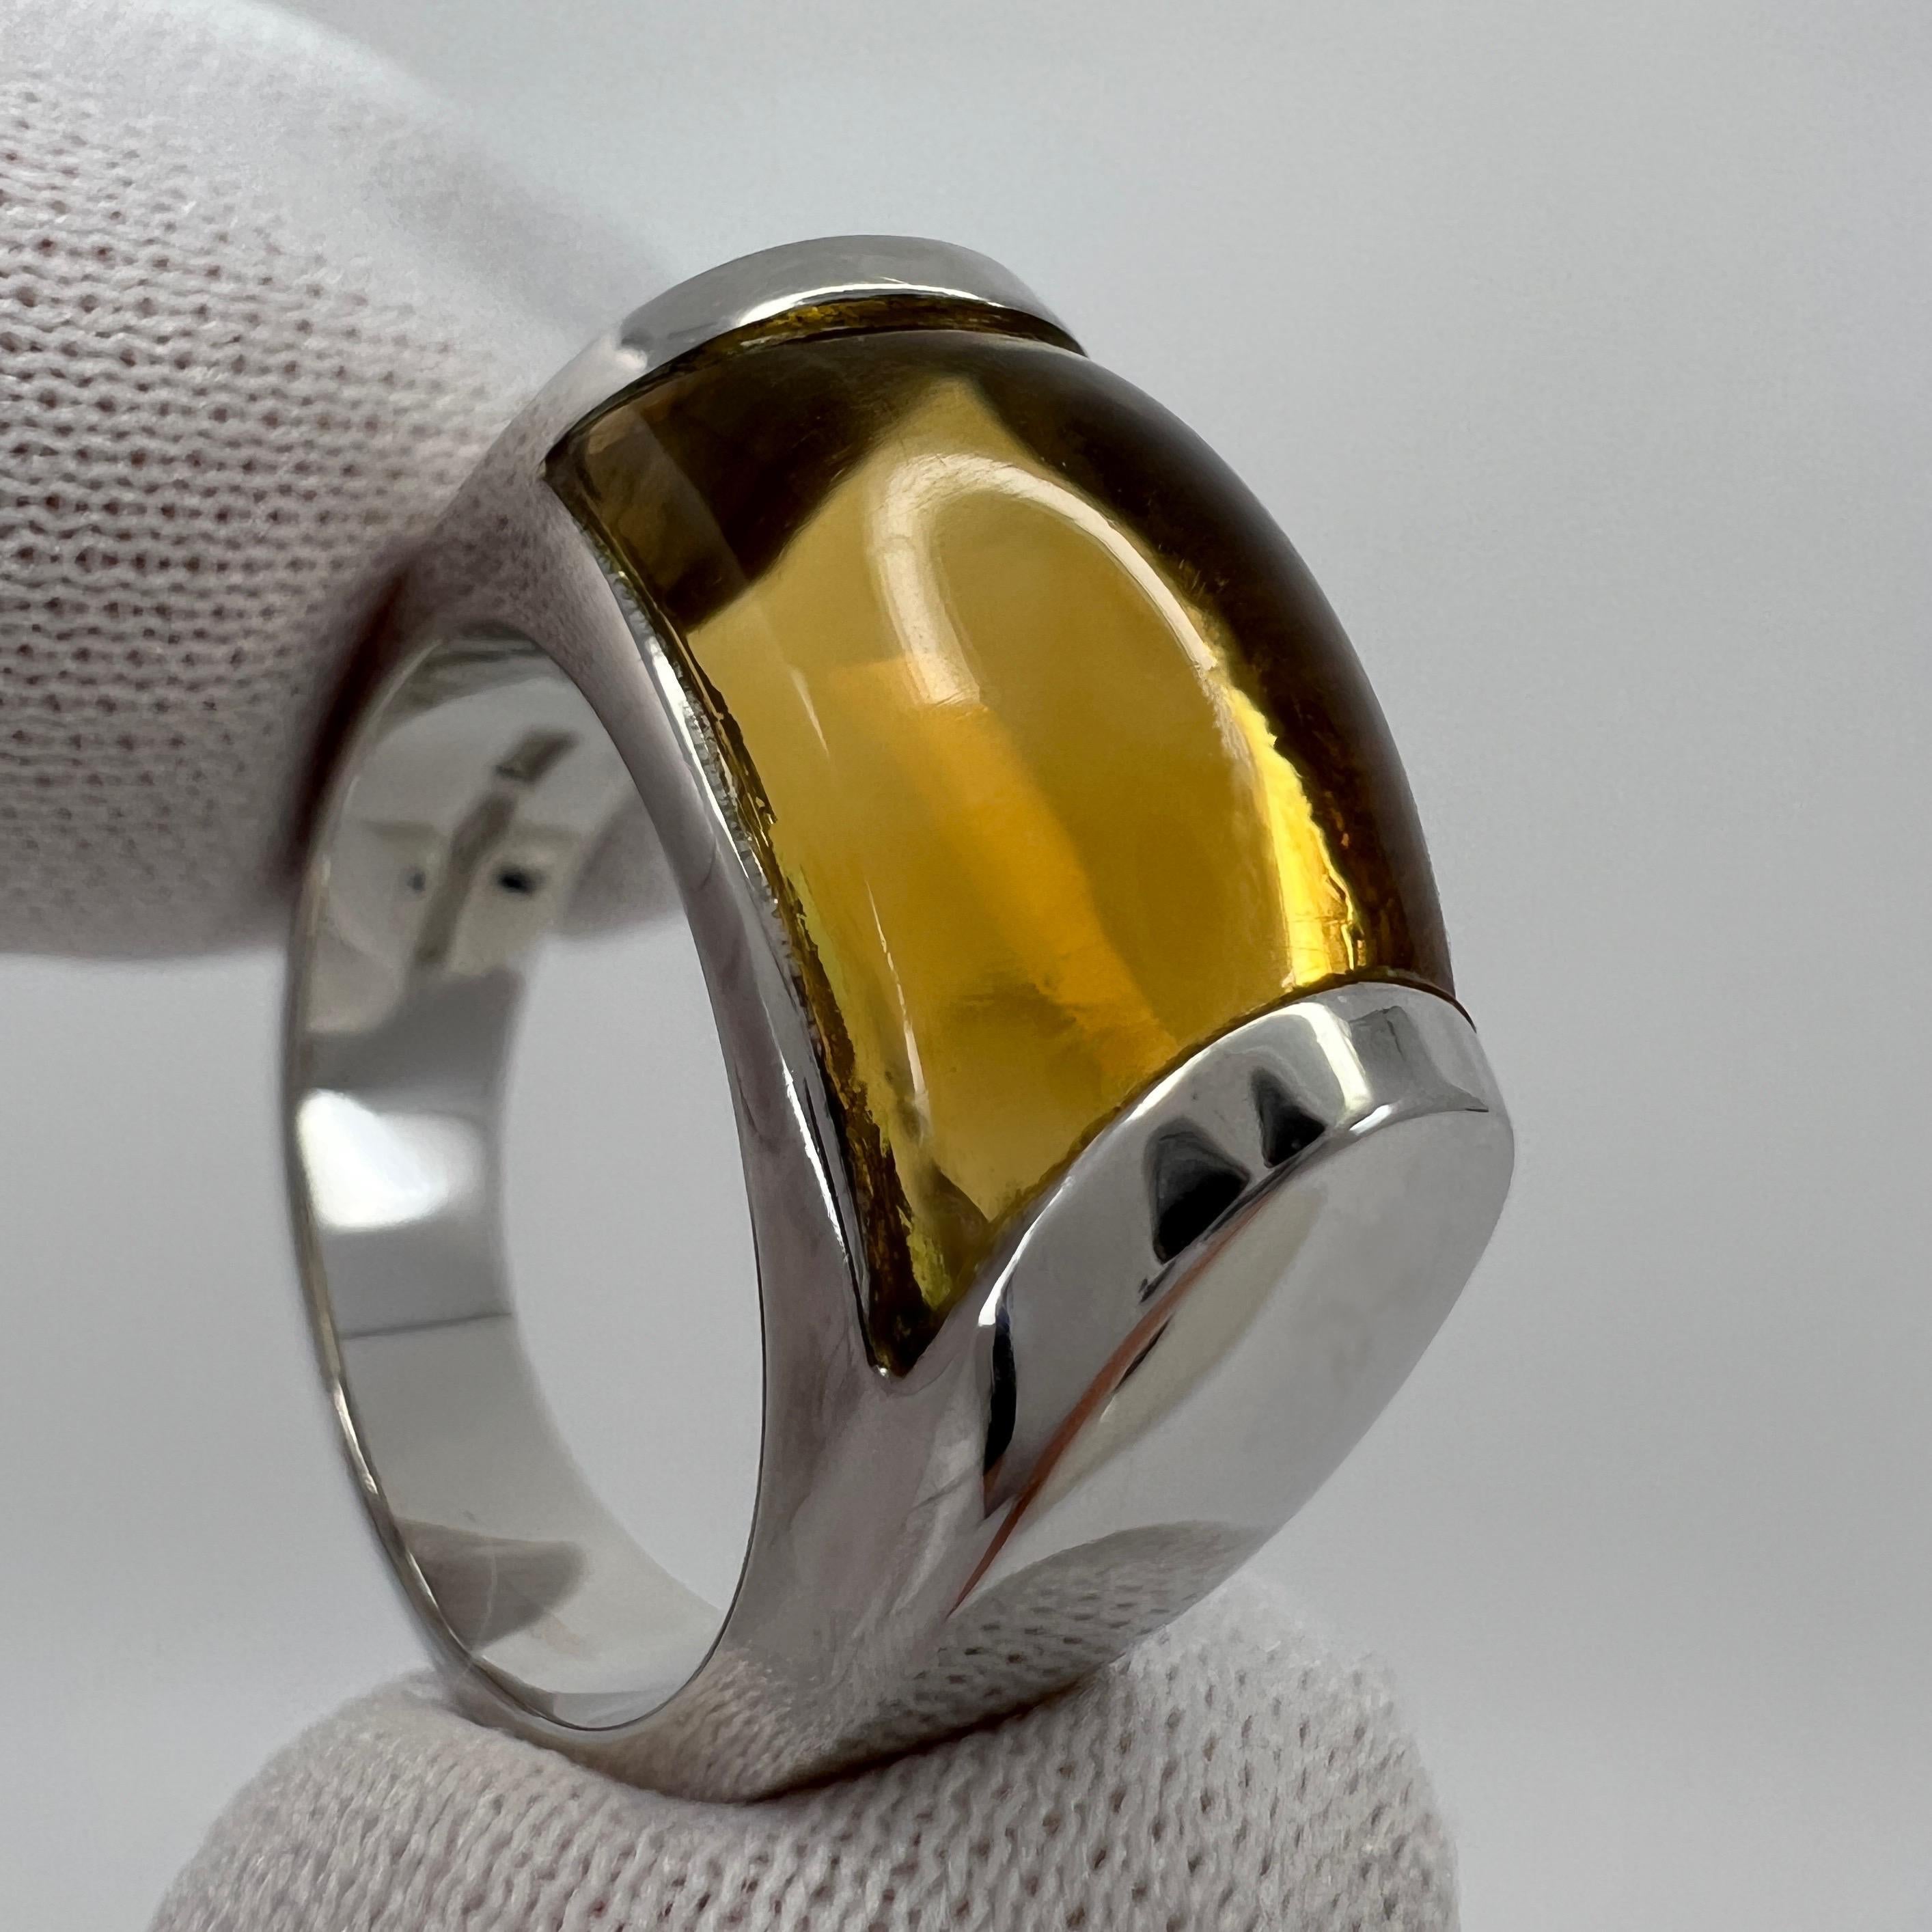 Rare Bvlgari Bulgari Tronchetto 18k White Gold Yellow Citrine Ring with Box For Sale 2